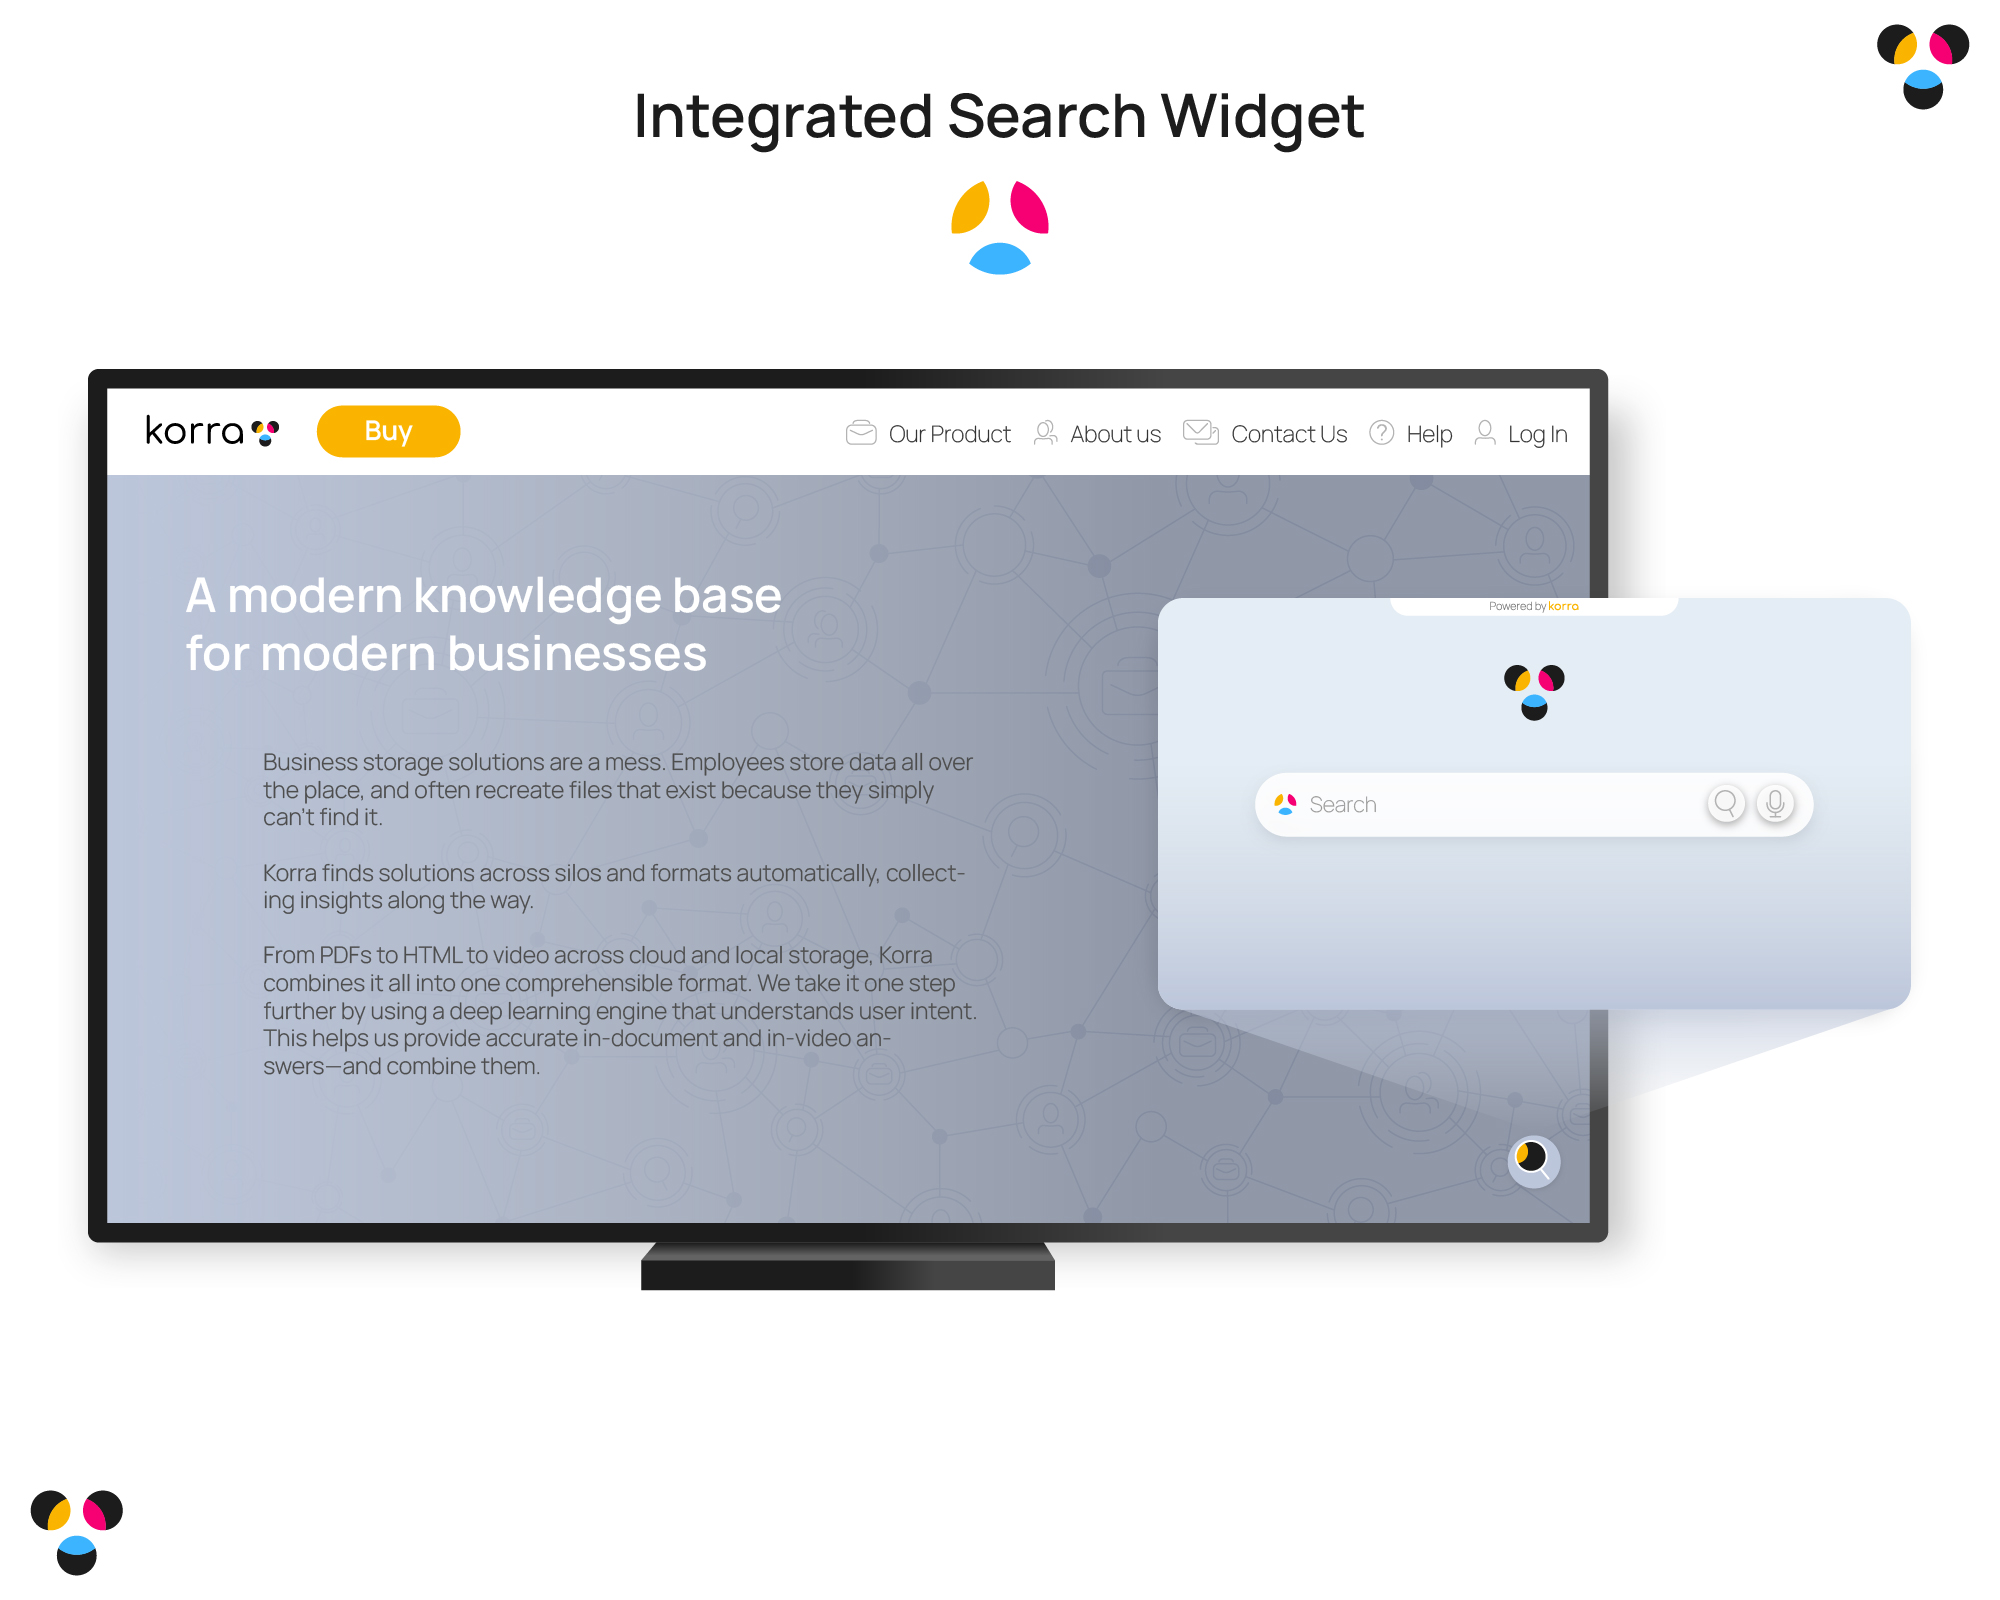 Korra integrated search widget